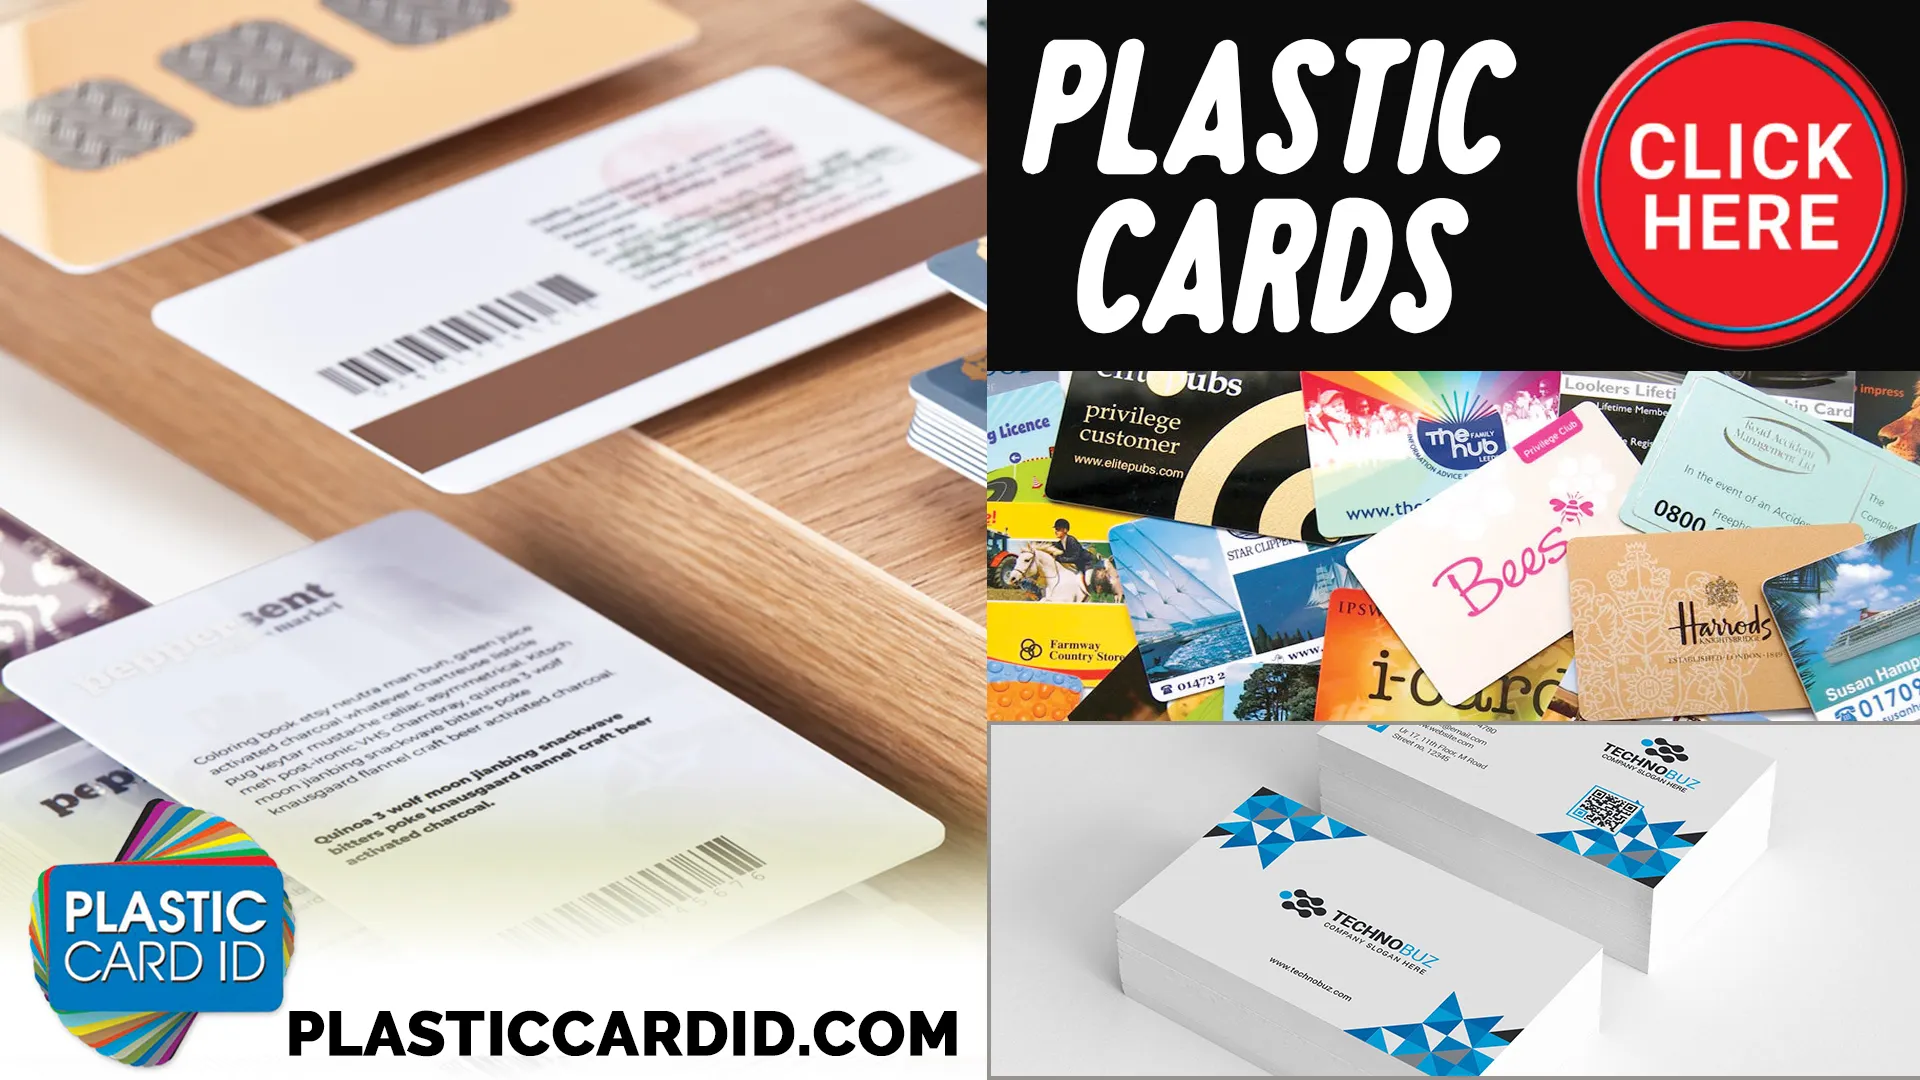 Plastic Card Options Galore at Plastic Card ID




